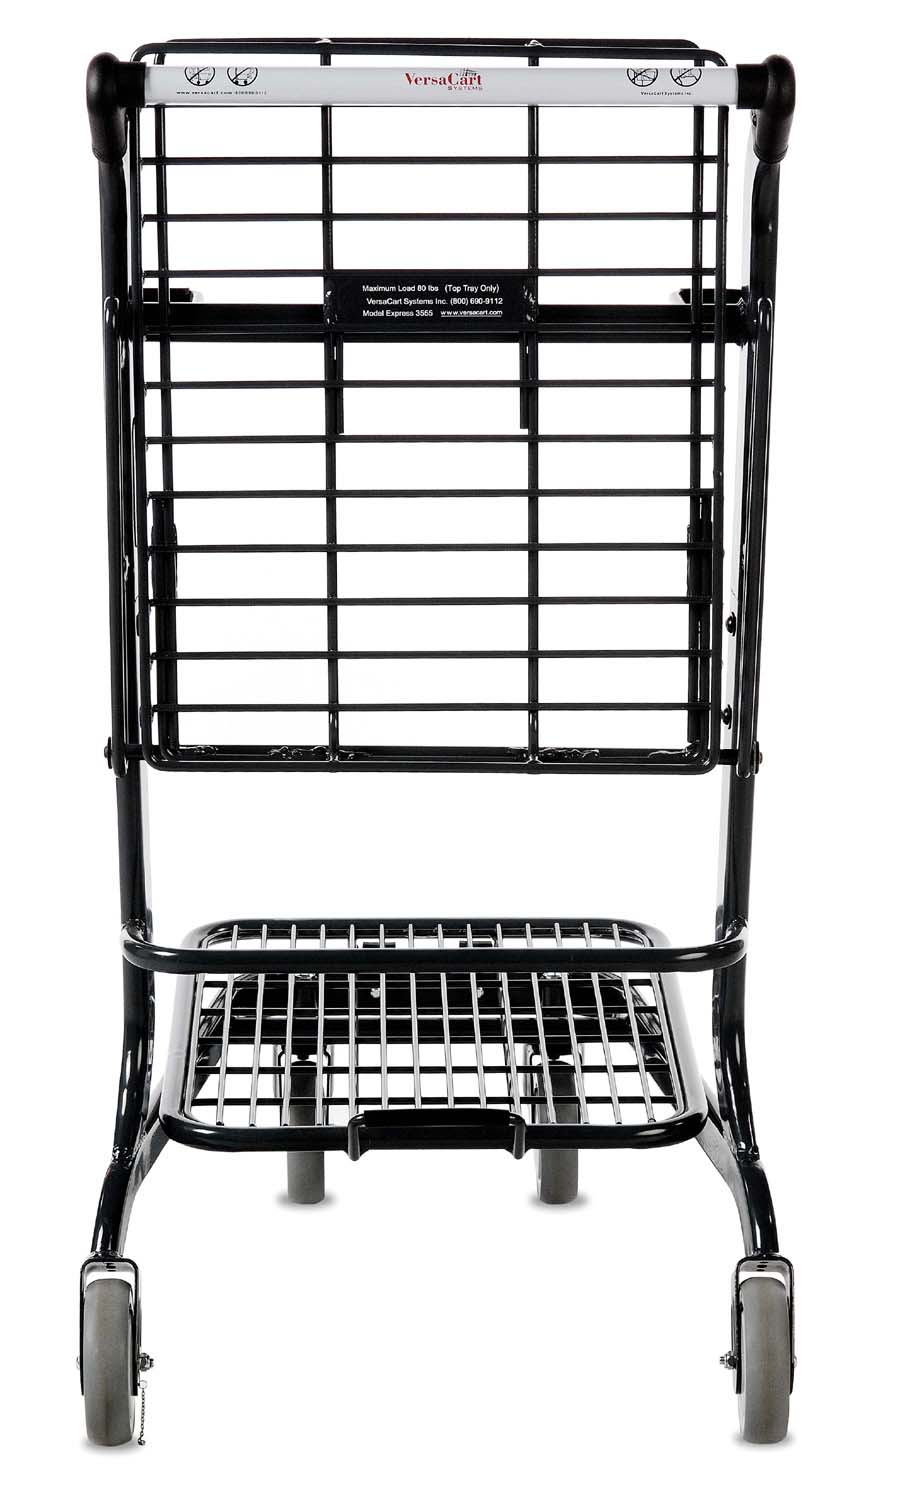 EXpress3555 Metal Shopping Cart, Utility Cart, Stocking Cart